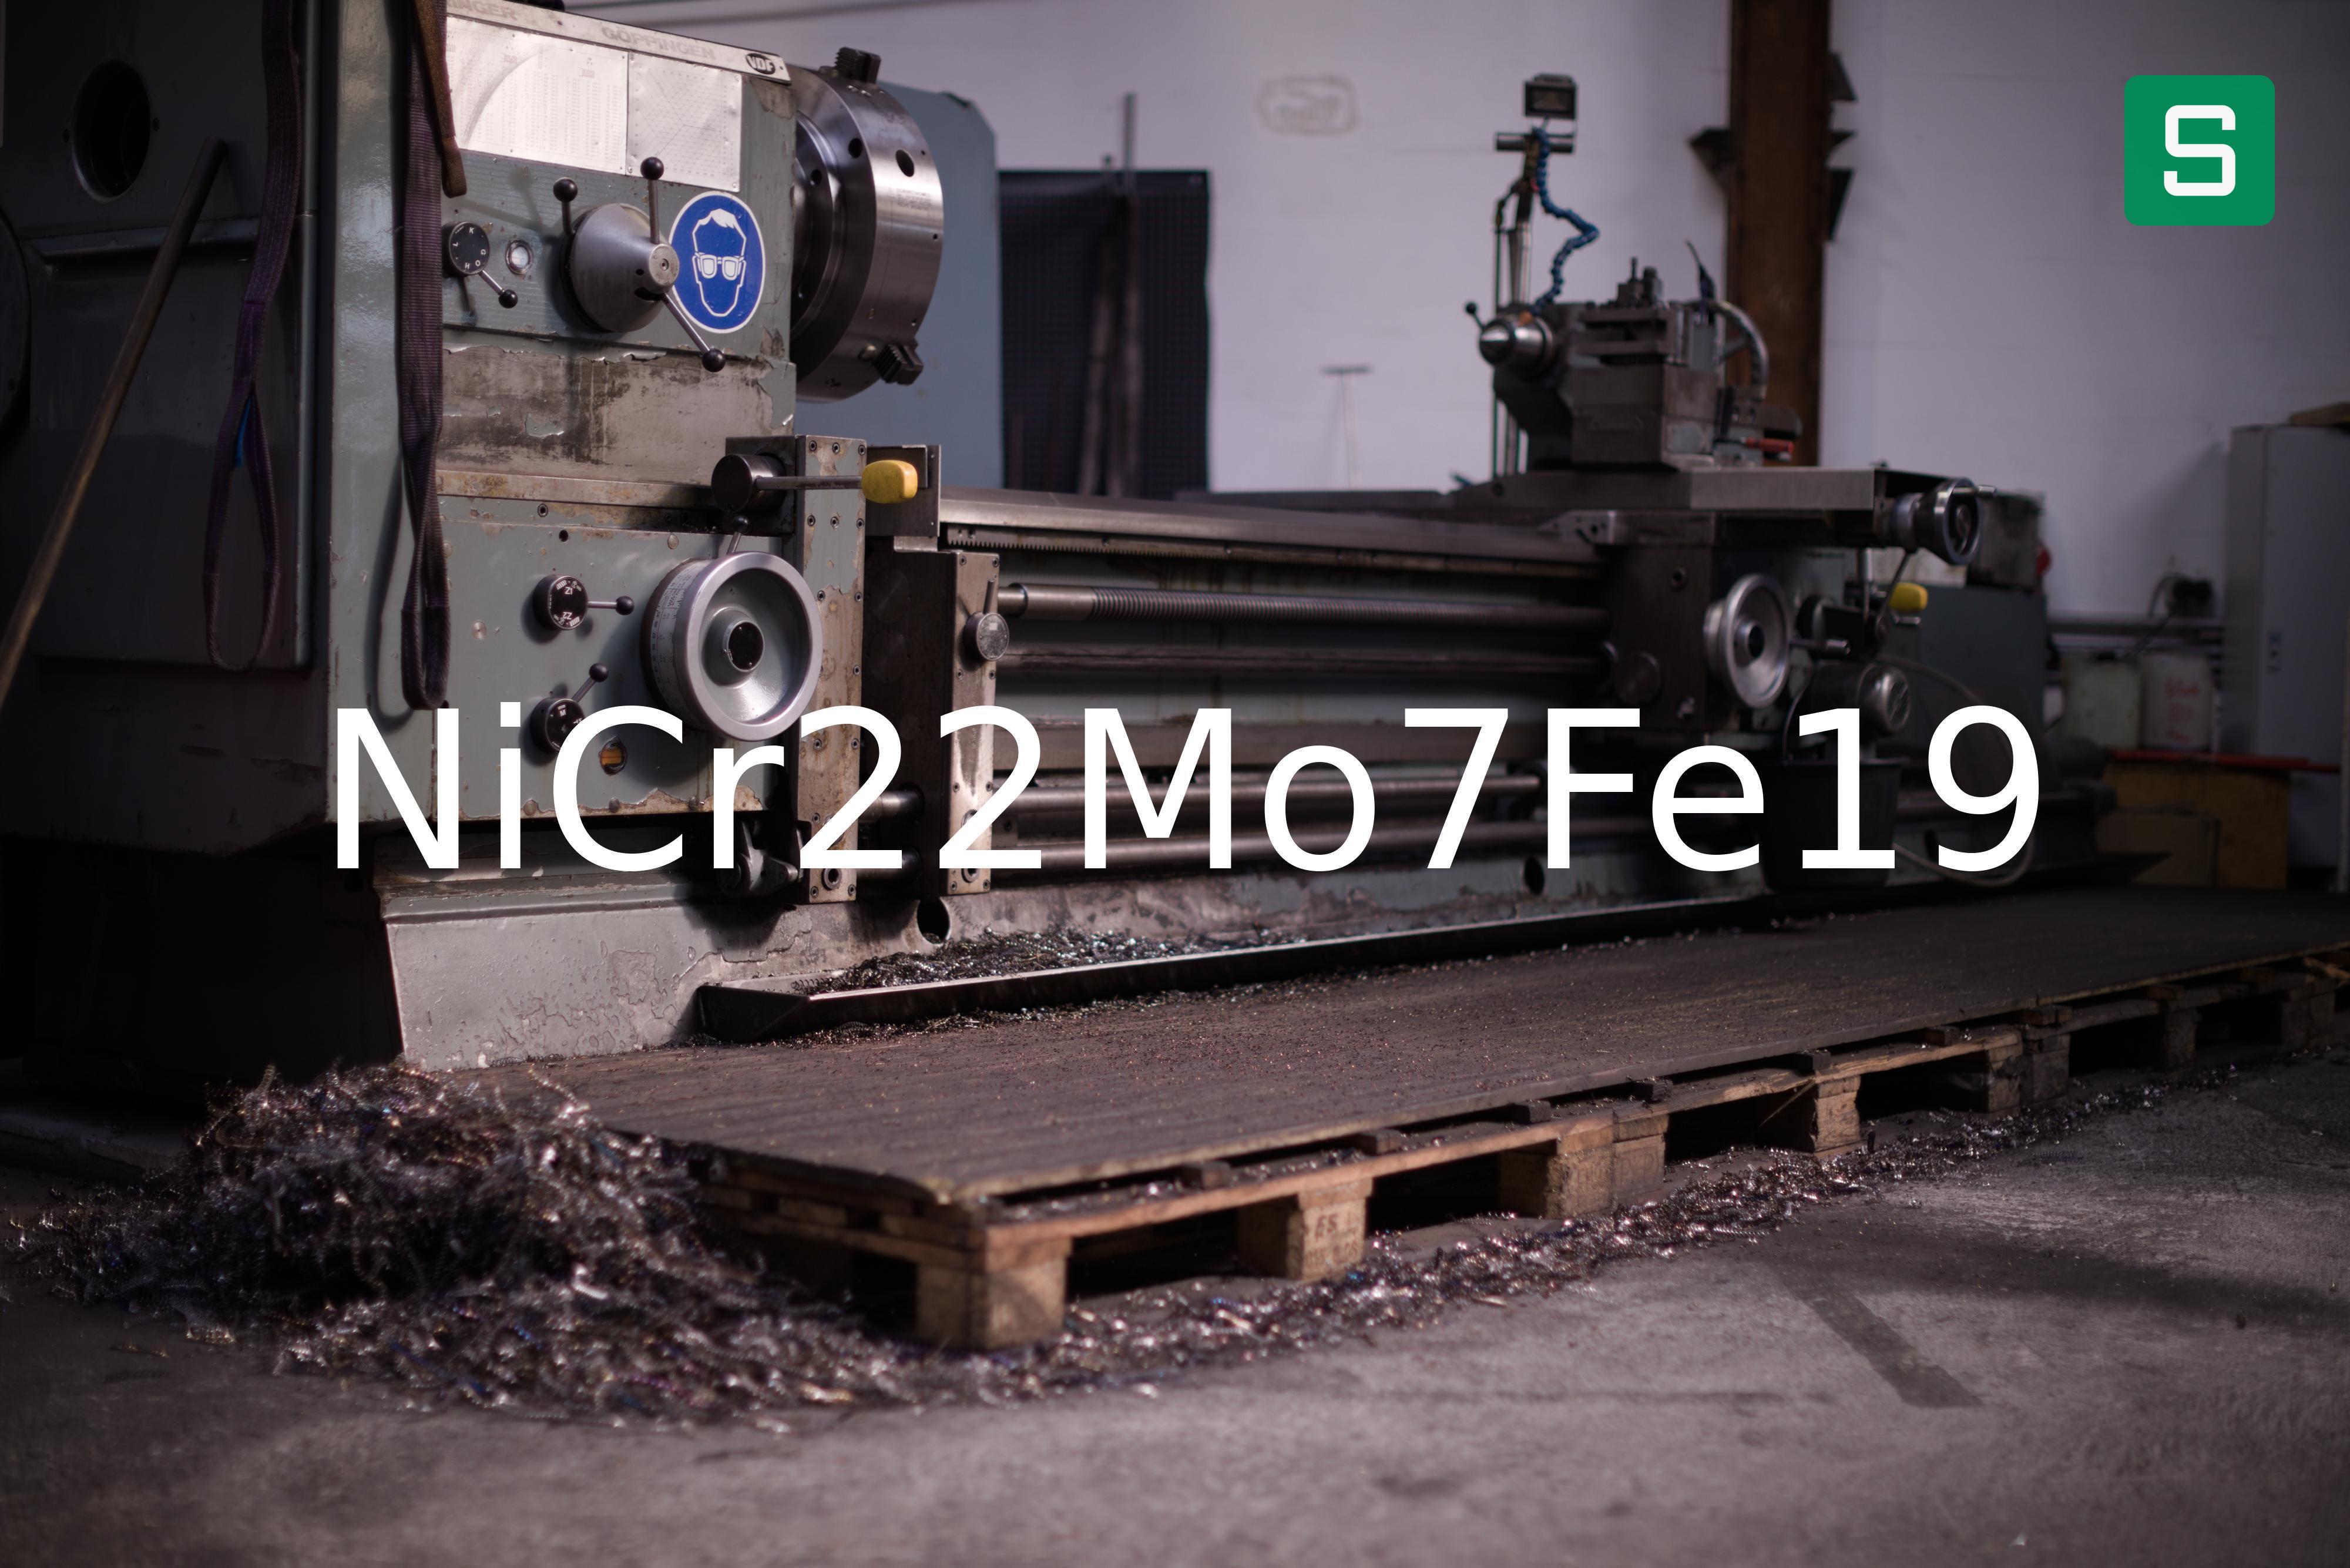 Steel Material: NiCr22Mo7Fe19